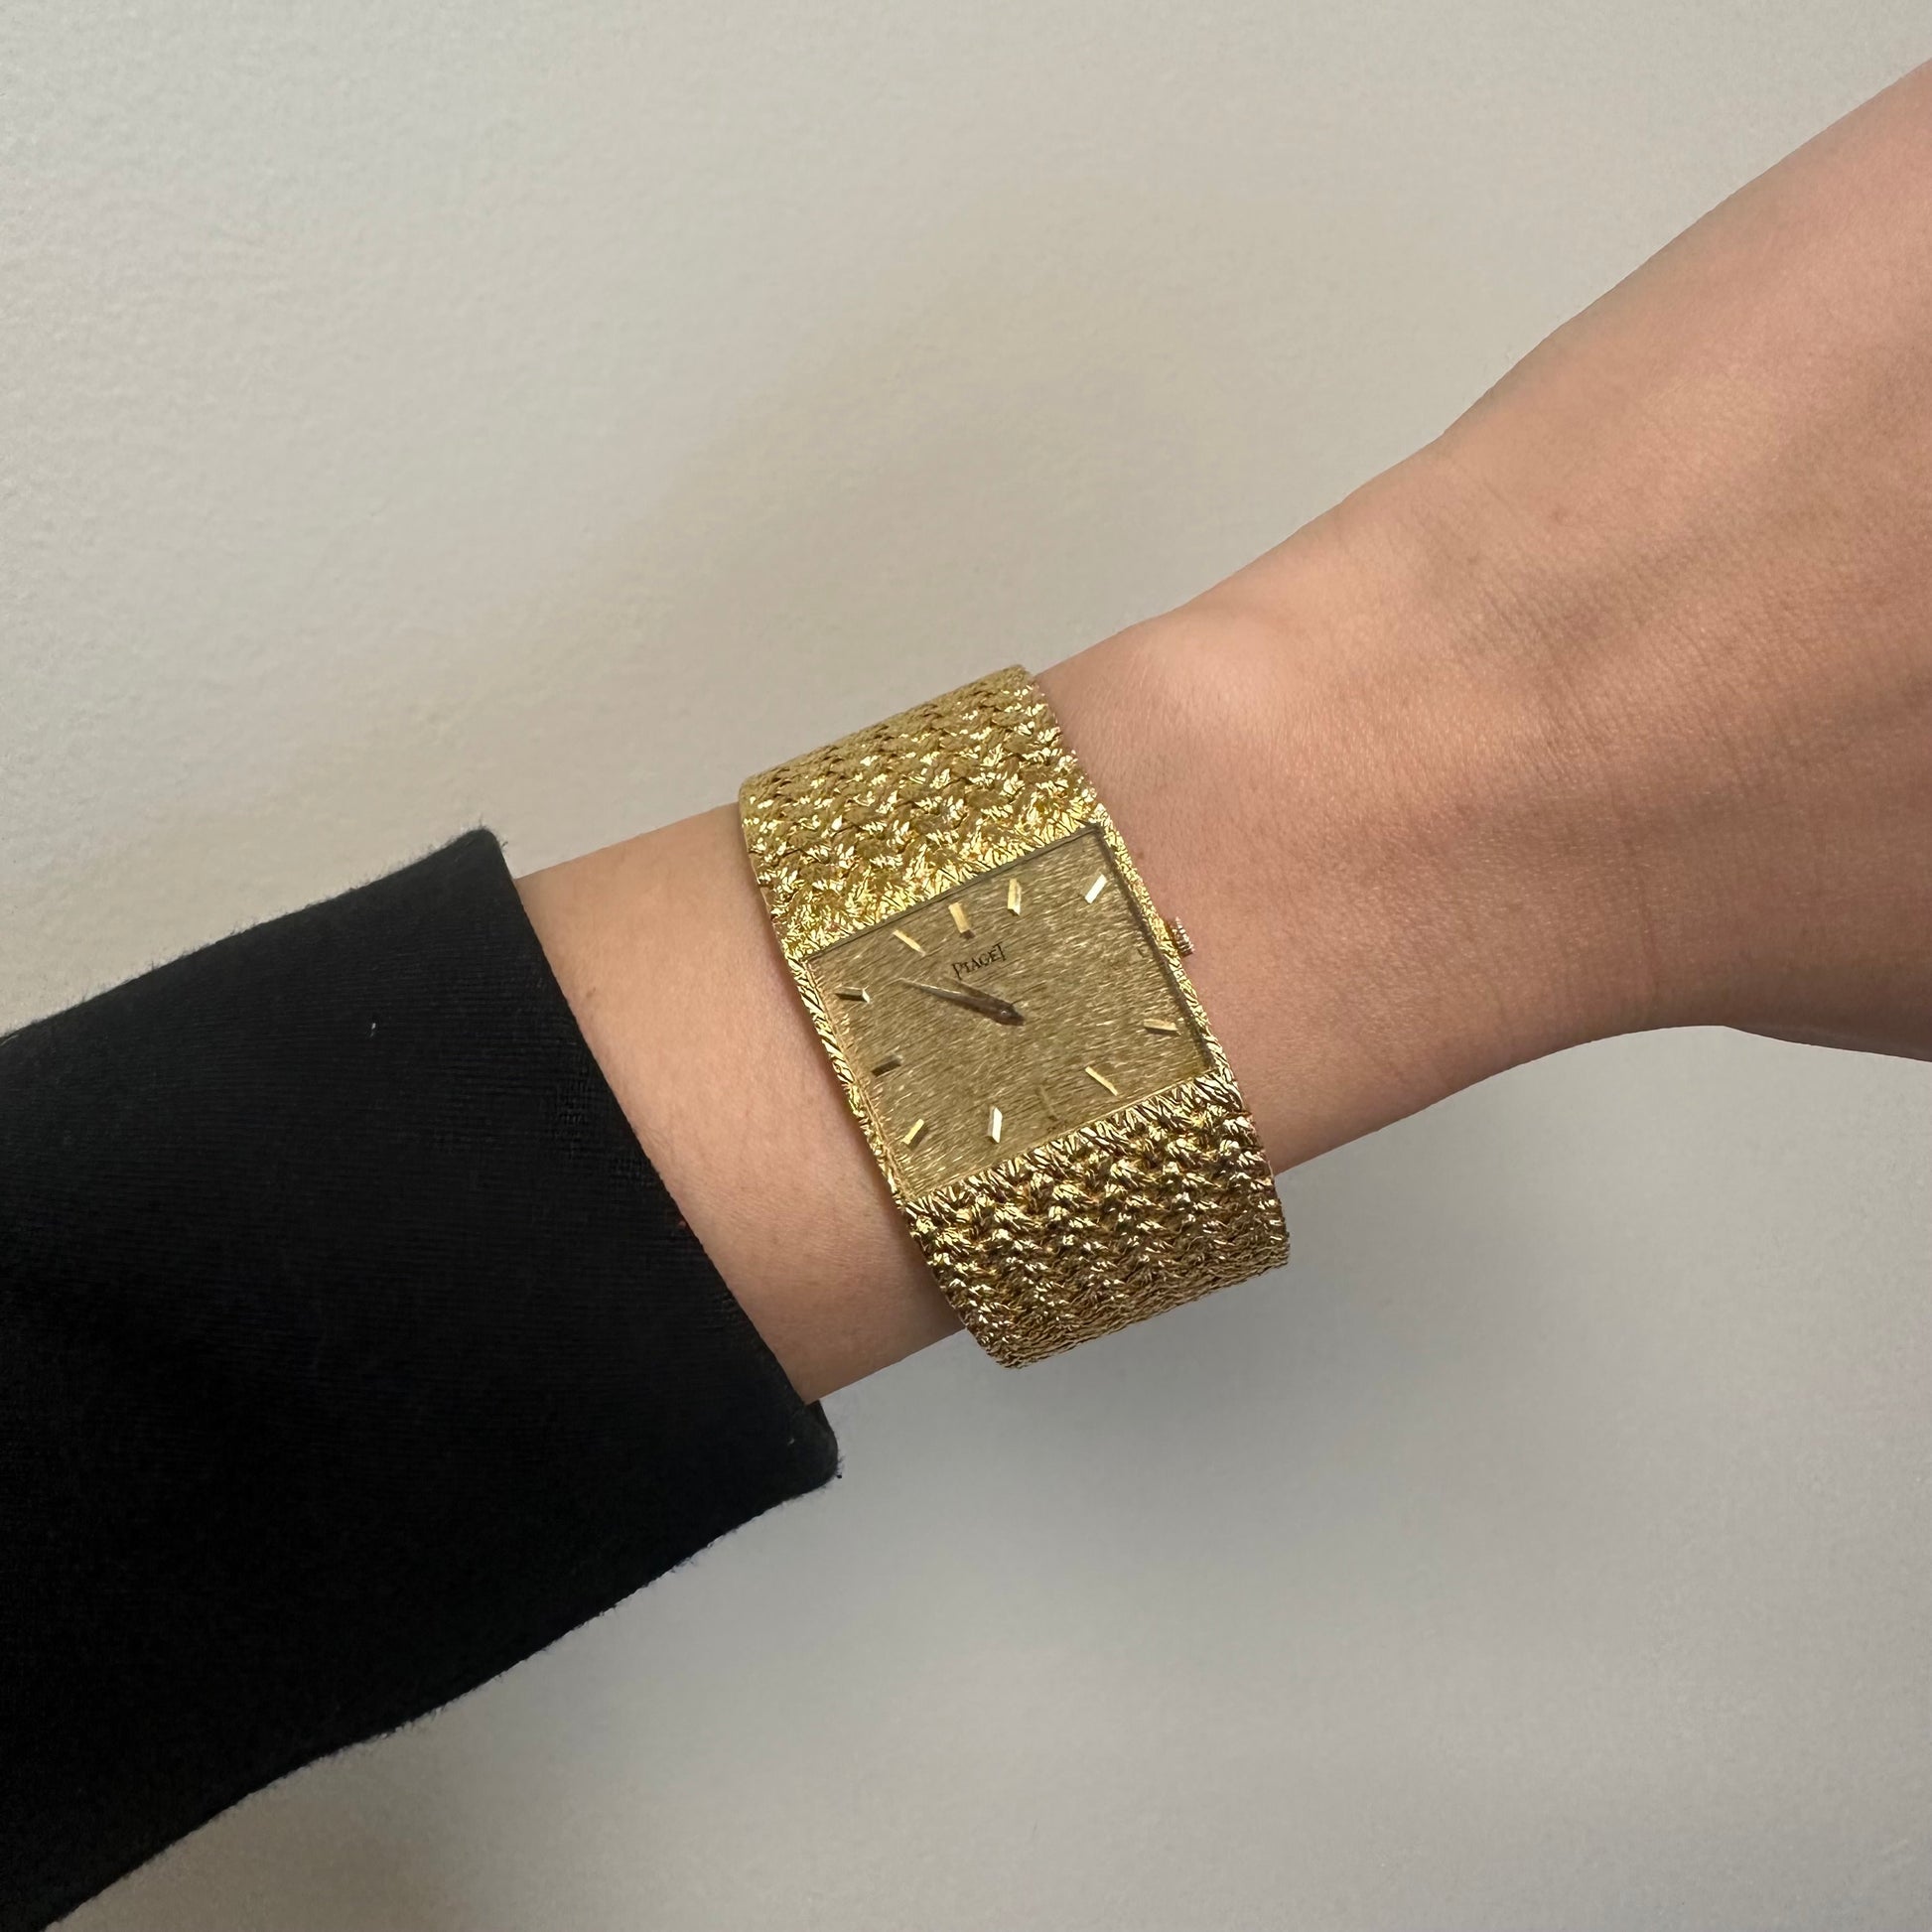 Piaget 1980s 18KT Yellow Gold Watch Bracelet worn on wrist